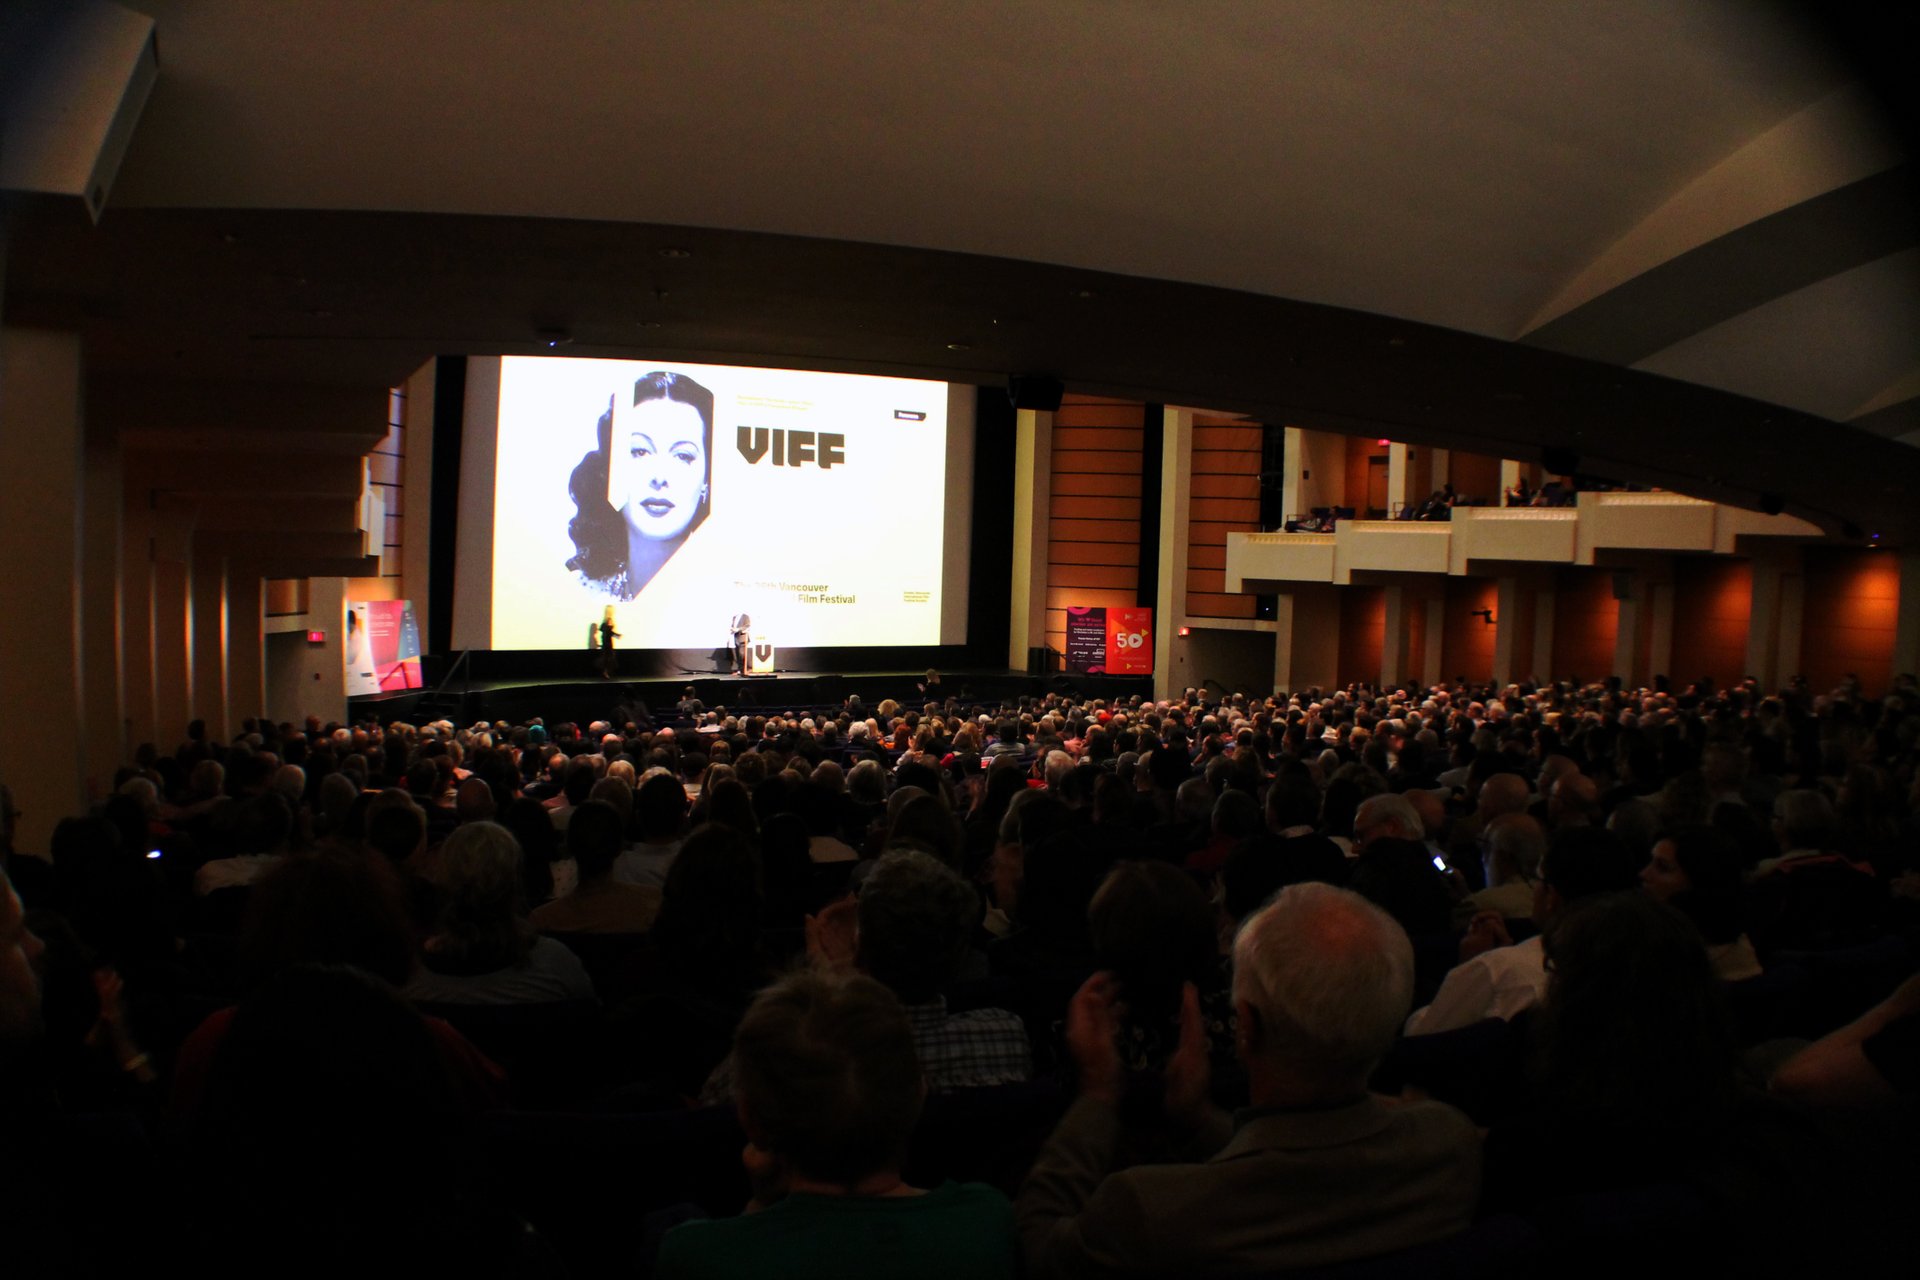 Vancouver International Film Festival (VIFF)